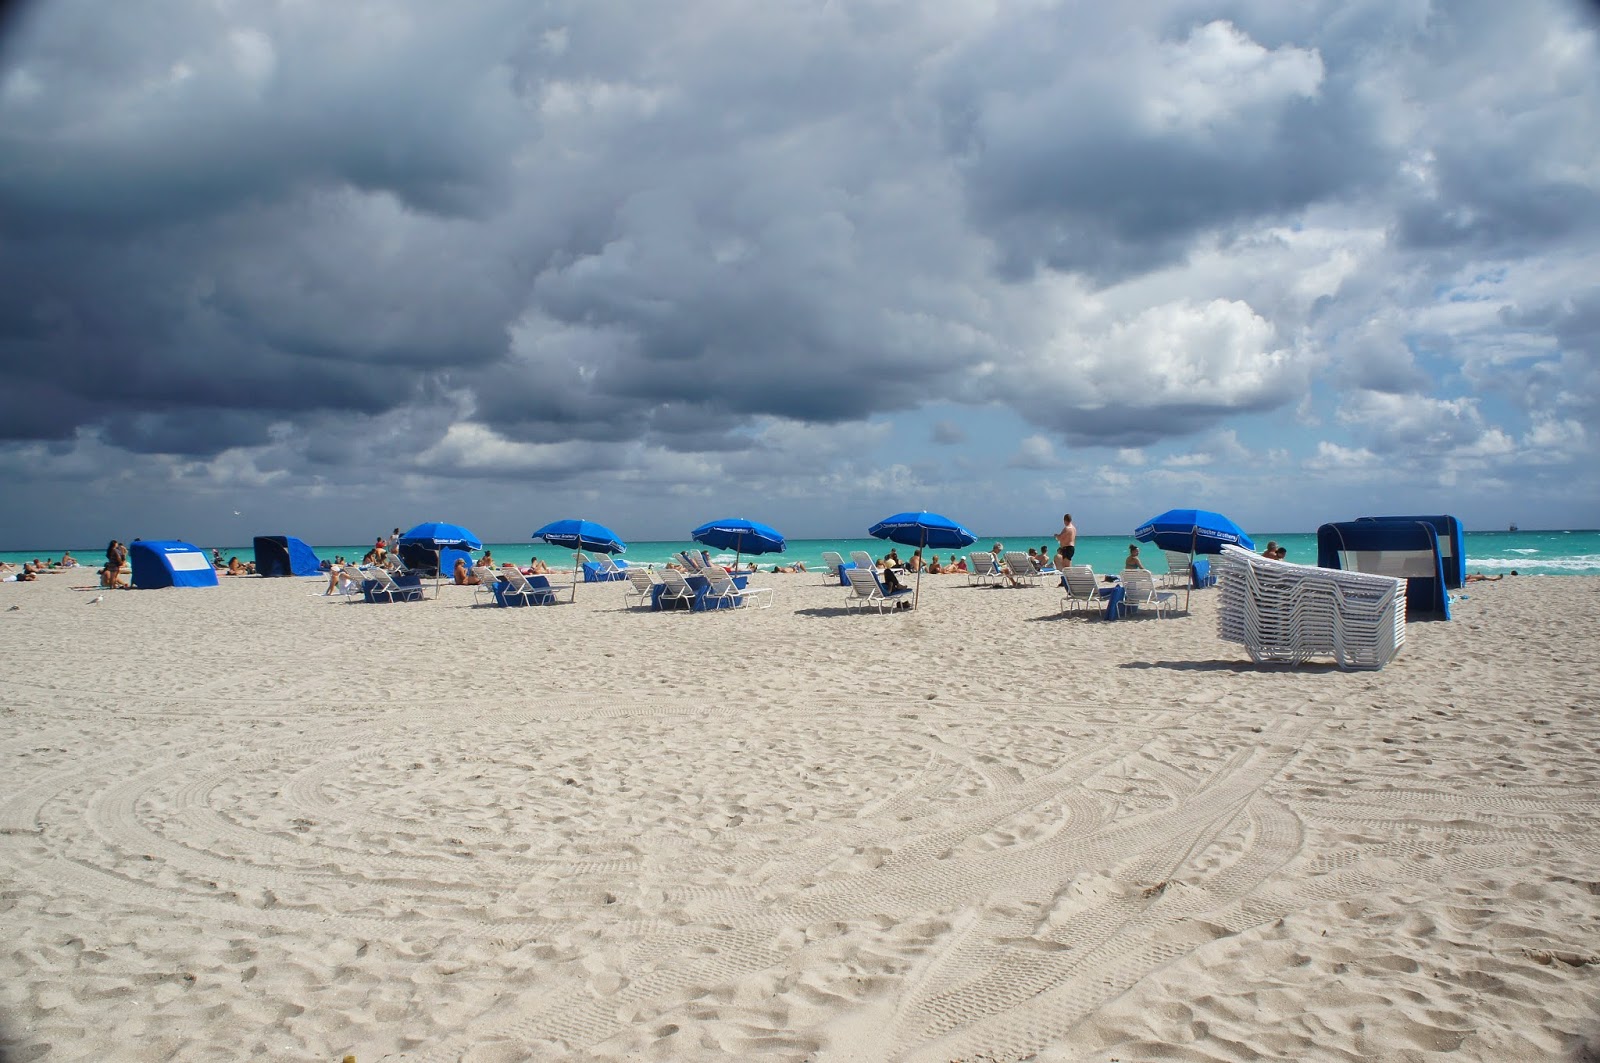 blue umbrellas in the beach